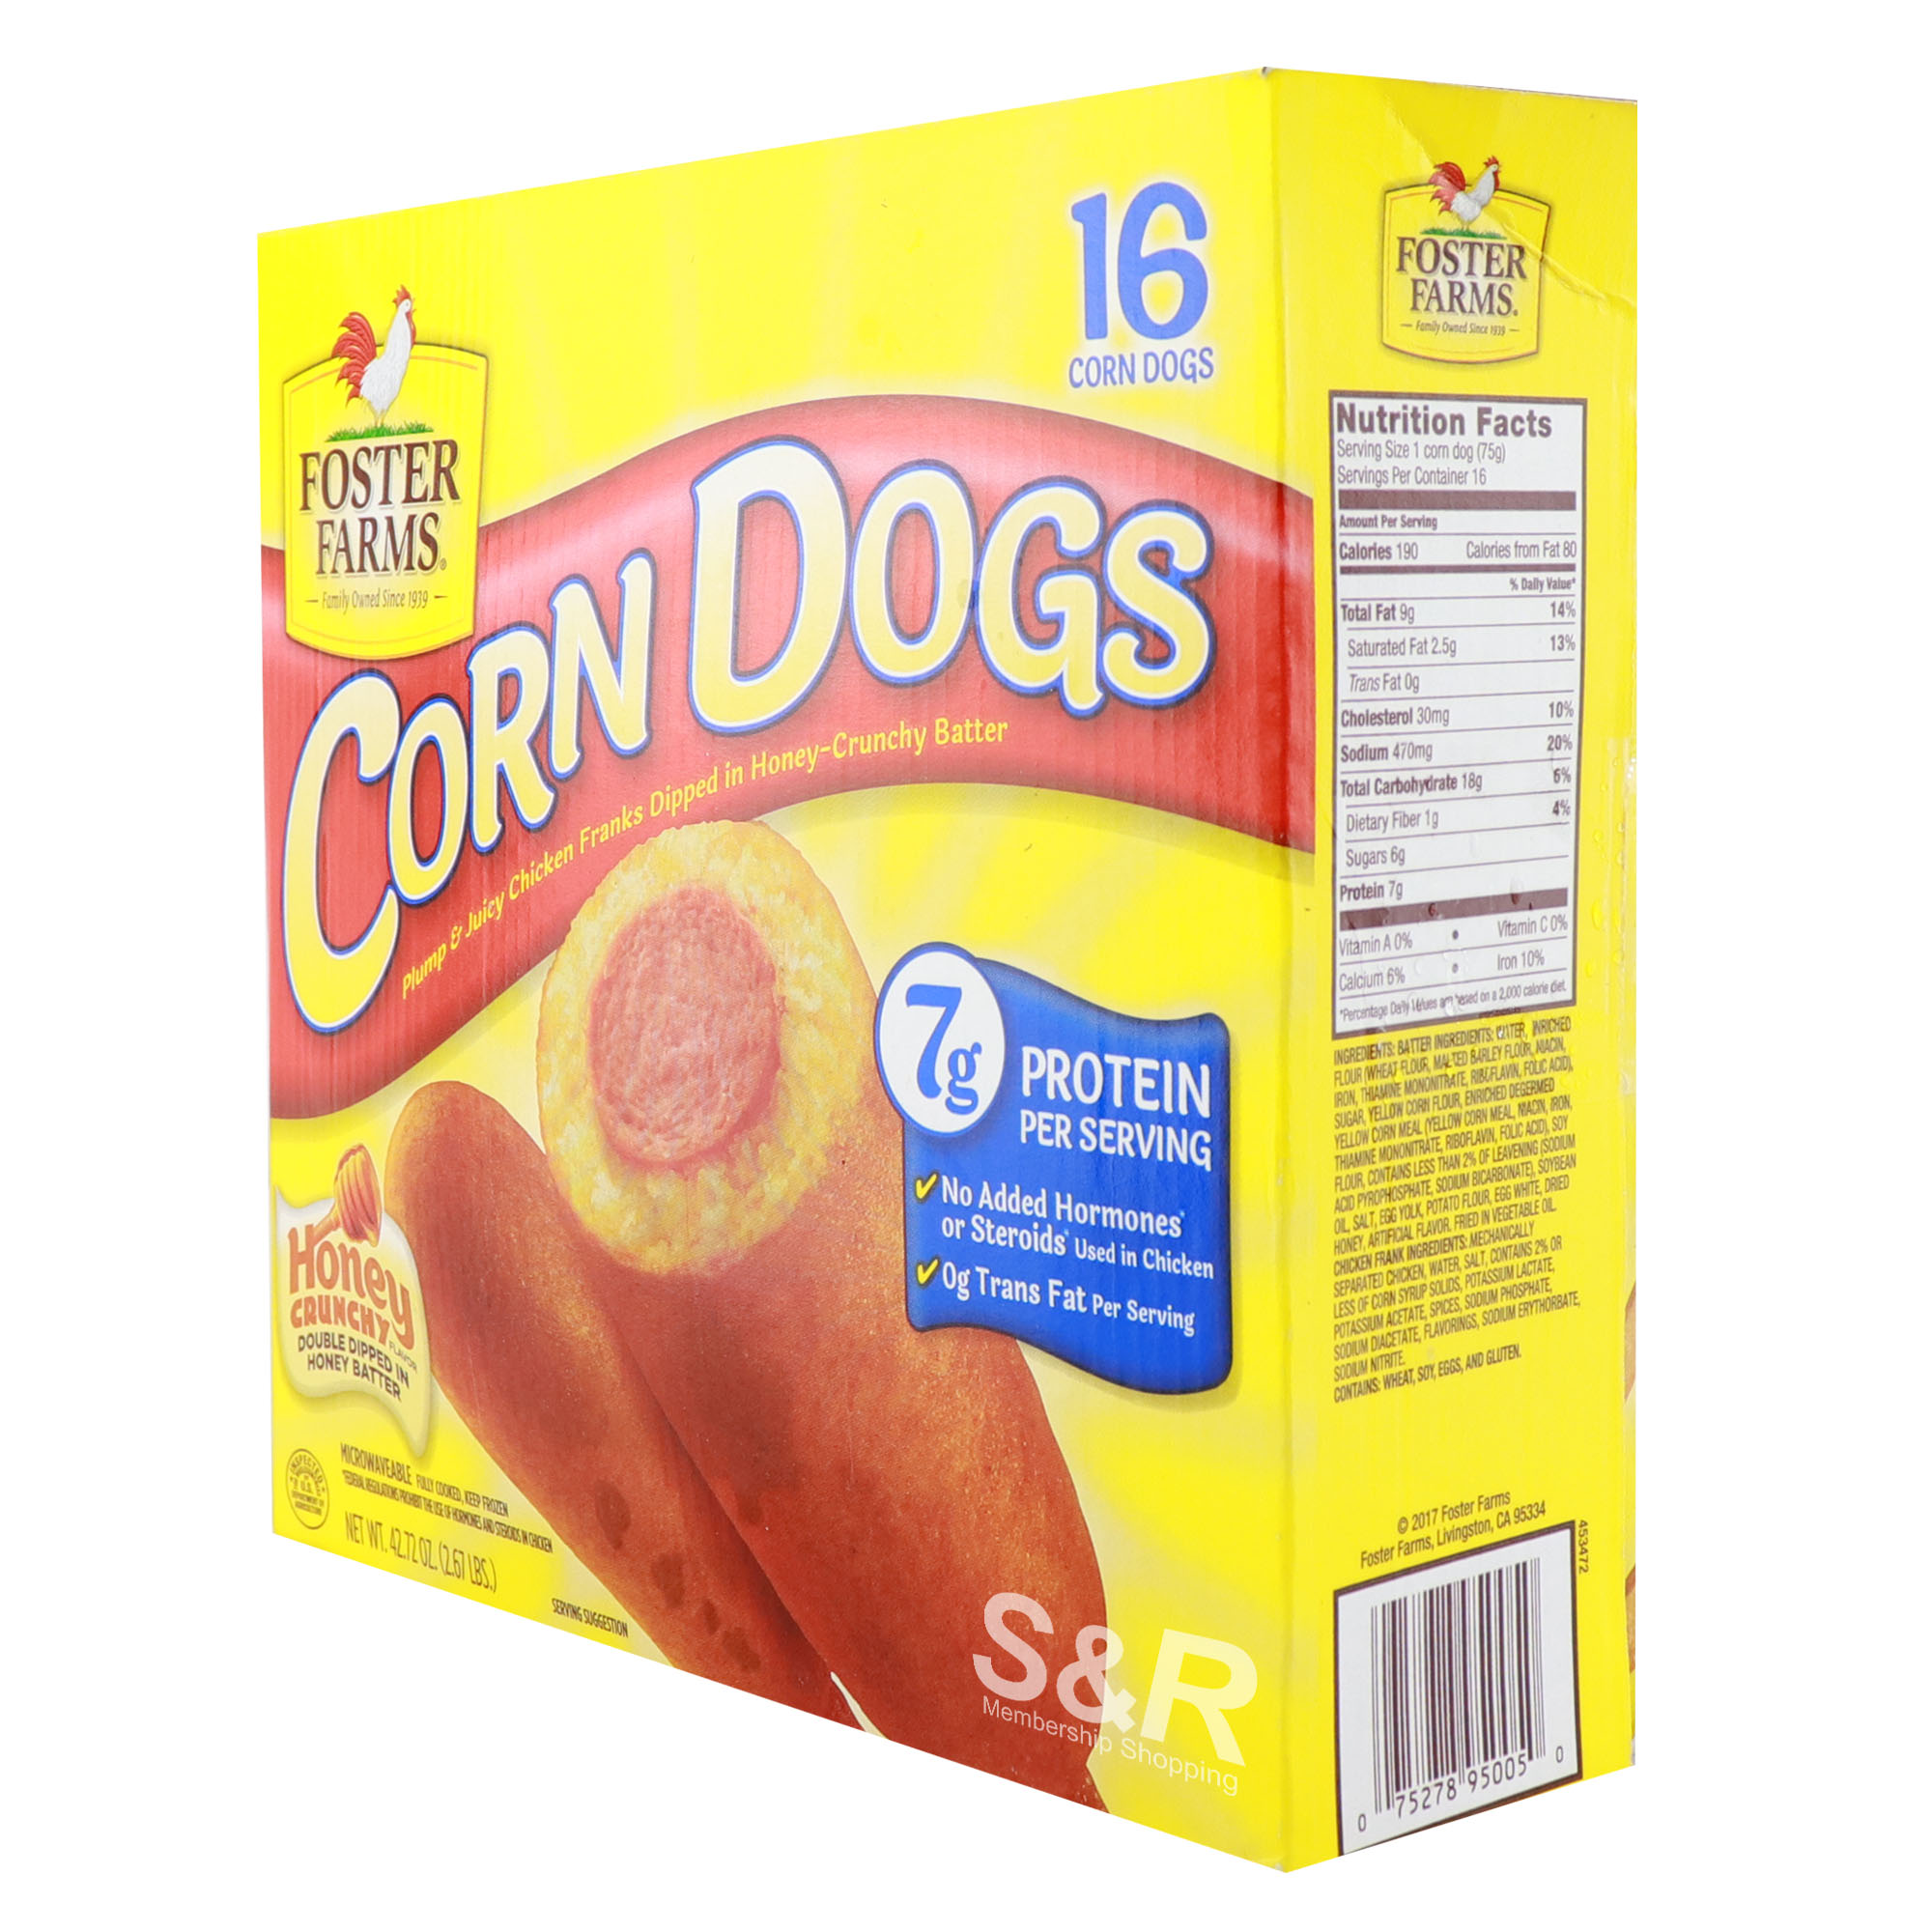 Corn dogs